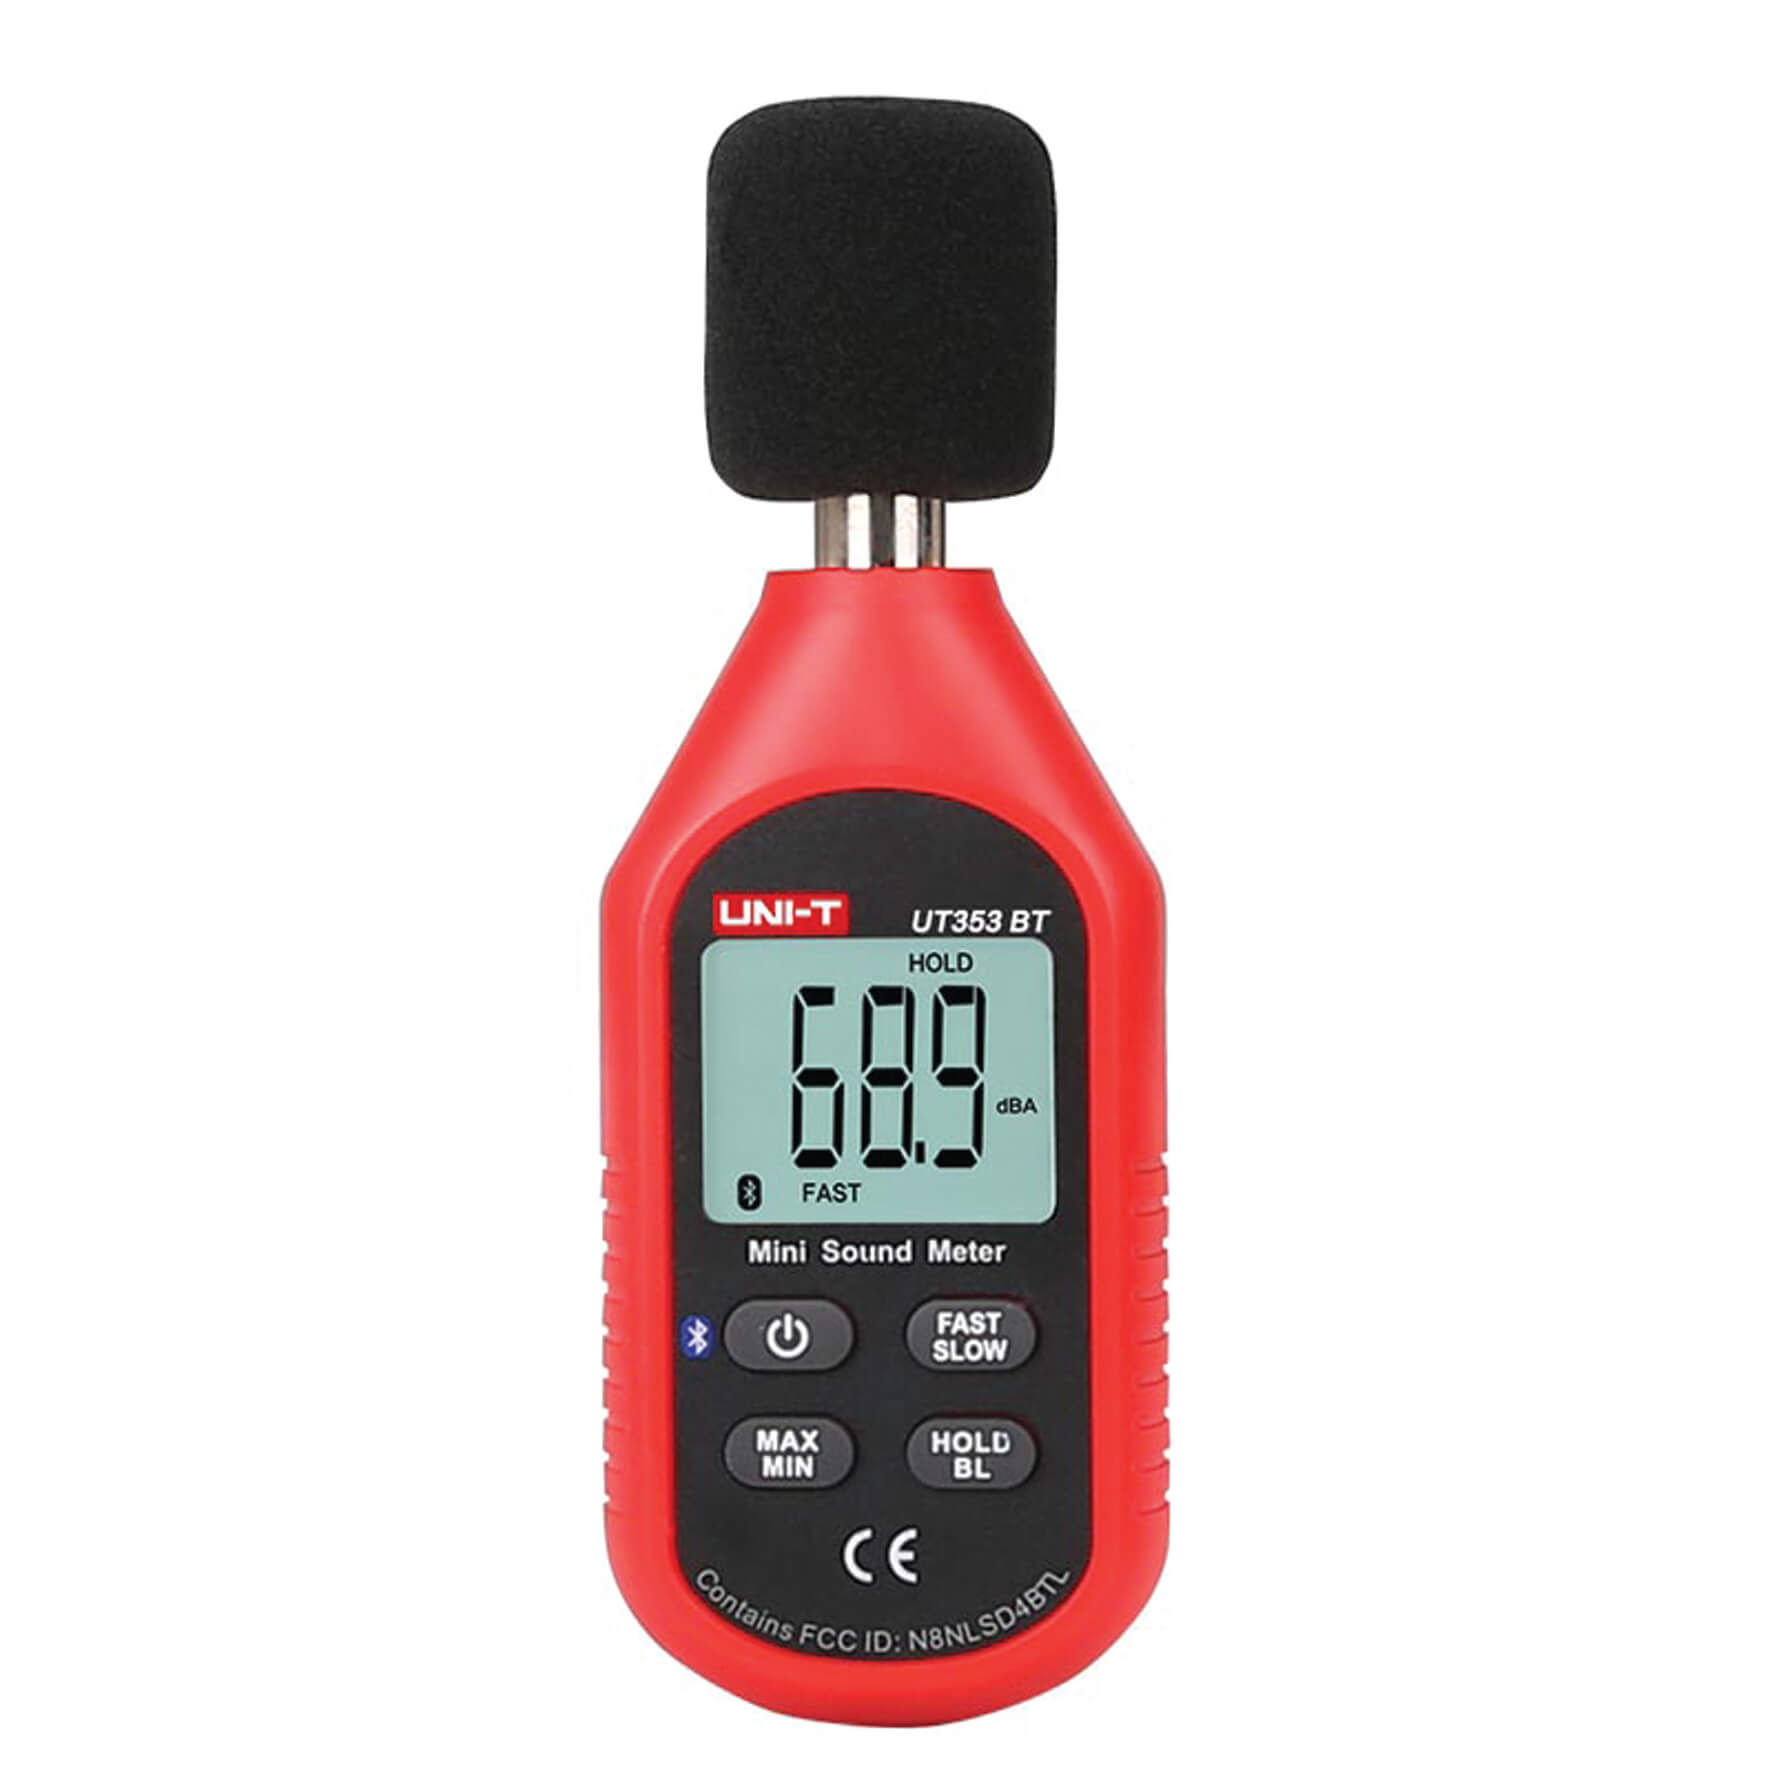 Uni-T Mini Sound Level Meter - Bluetooth